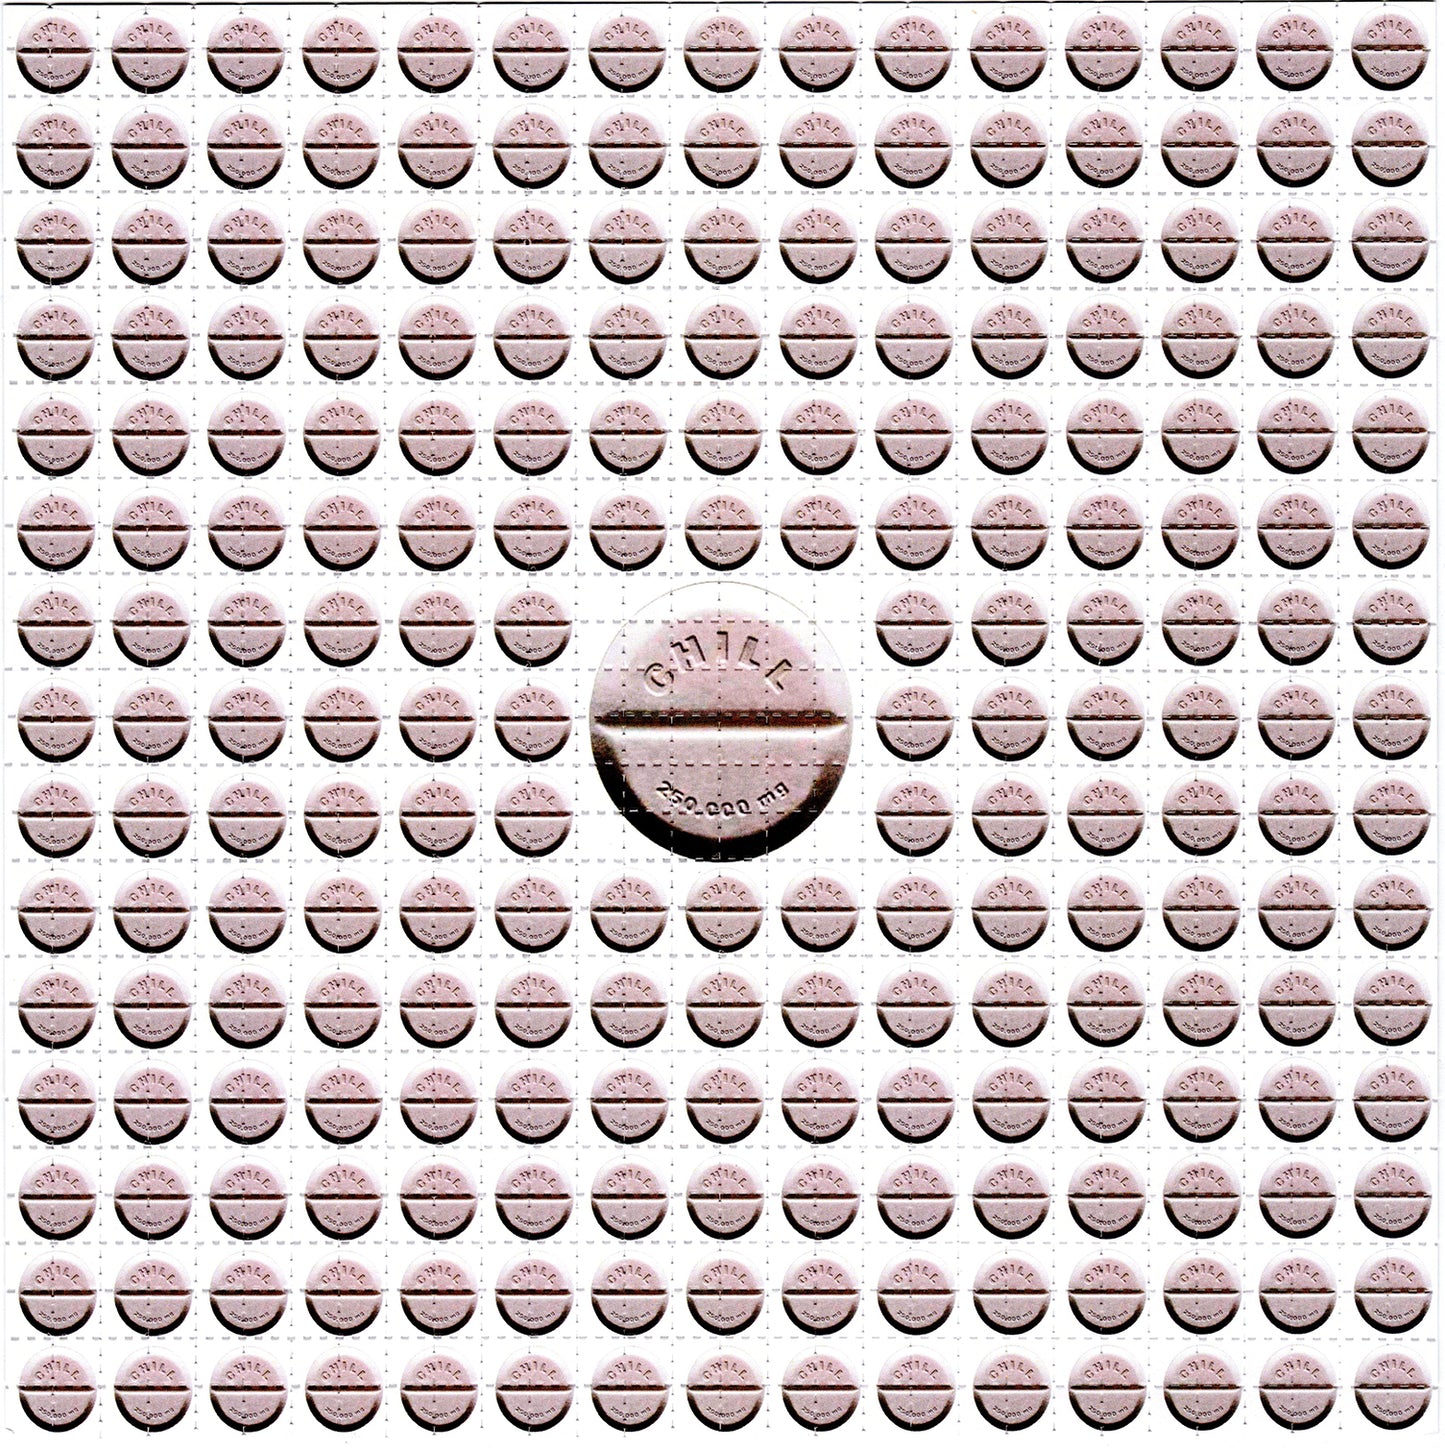 Chill Pill LSD blotter art print